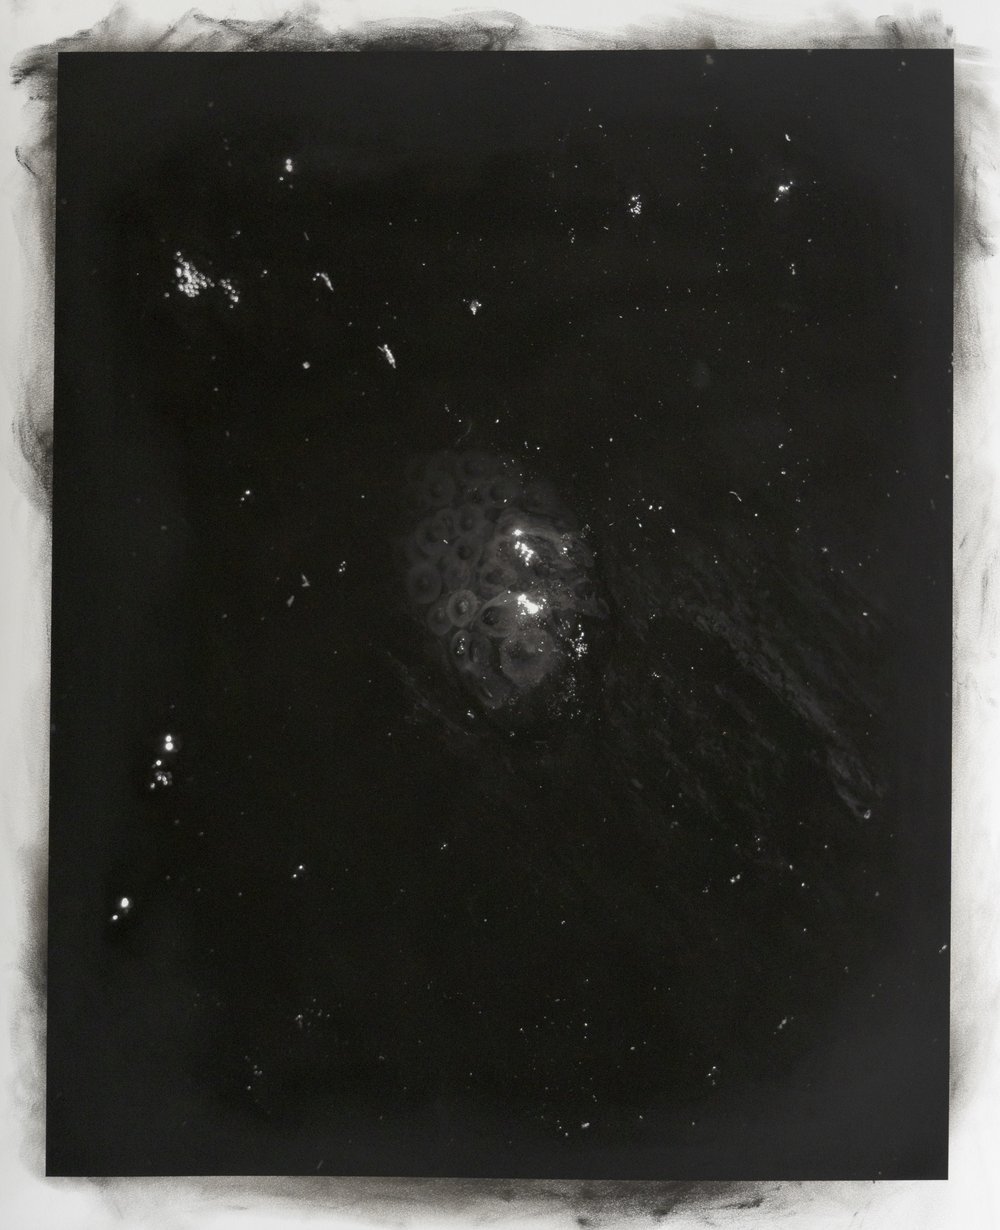  Archival Inkjet Print on Hahnemühle Photo Rag, Charcoal, Pigment  28”x34” 